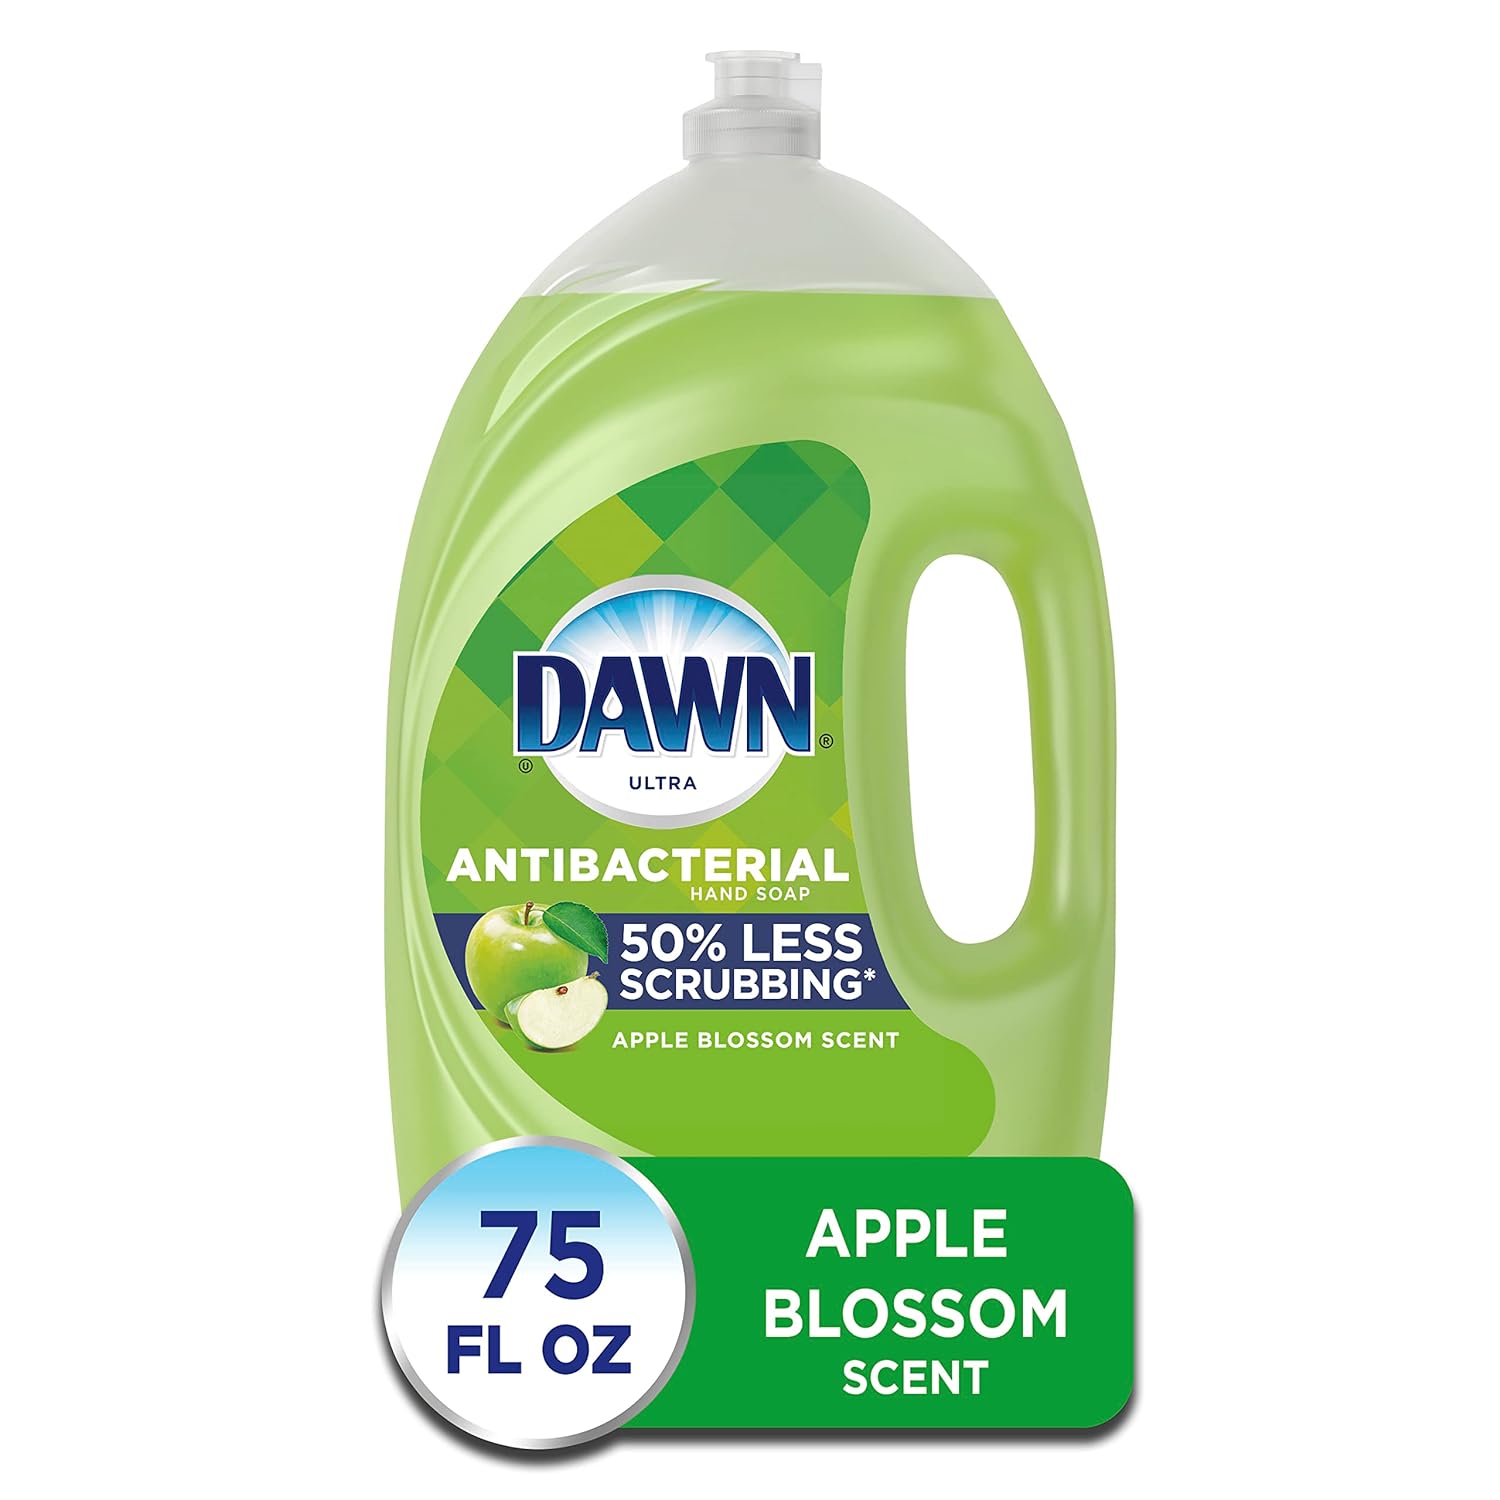 Dawn Ultra Antibacterial Hand Soap, Dishwashing Liquid Dish Soap, Apple Blossom Scent, 75 Fl Oz